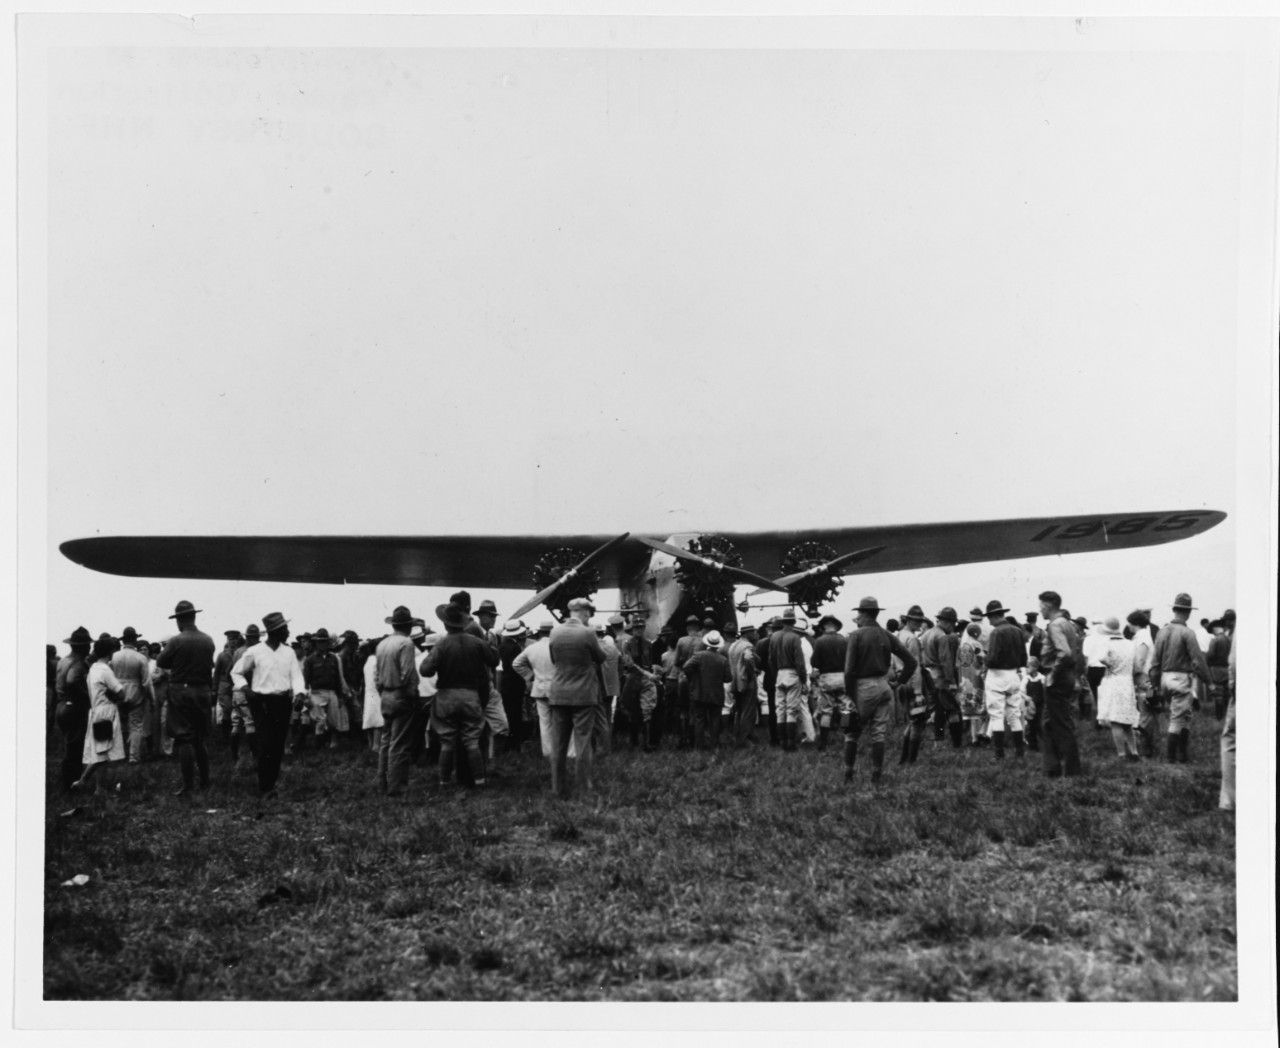 "Commander Rodgers' plane at Honolulu"